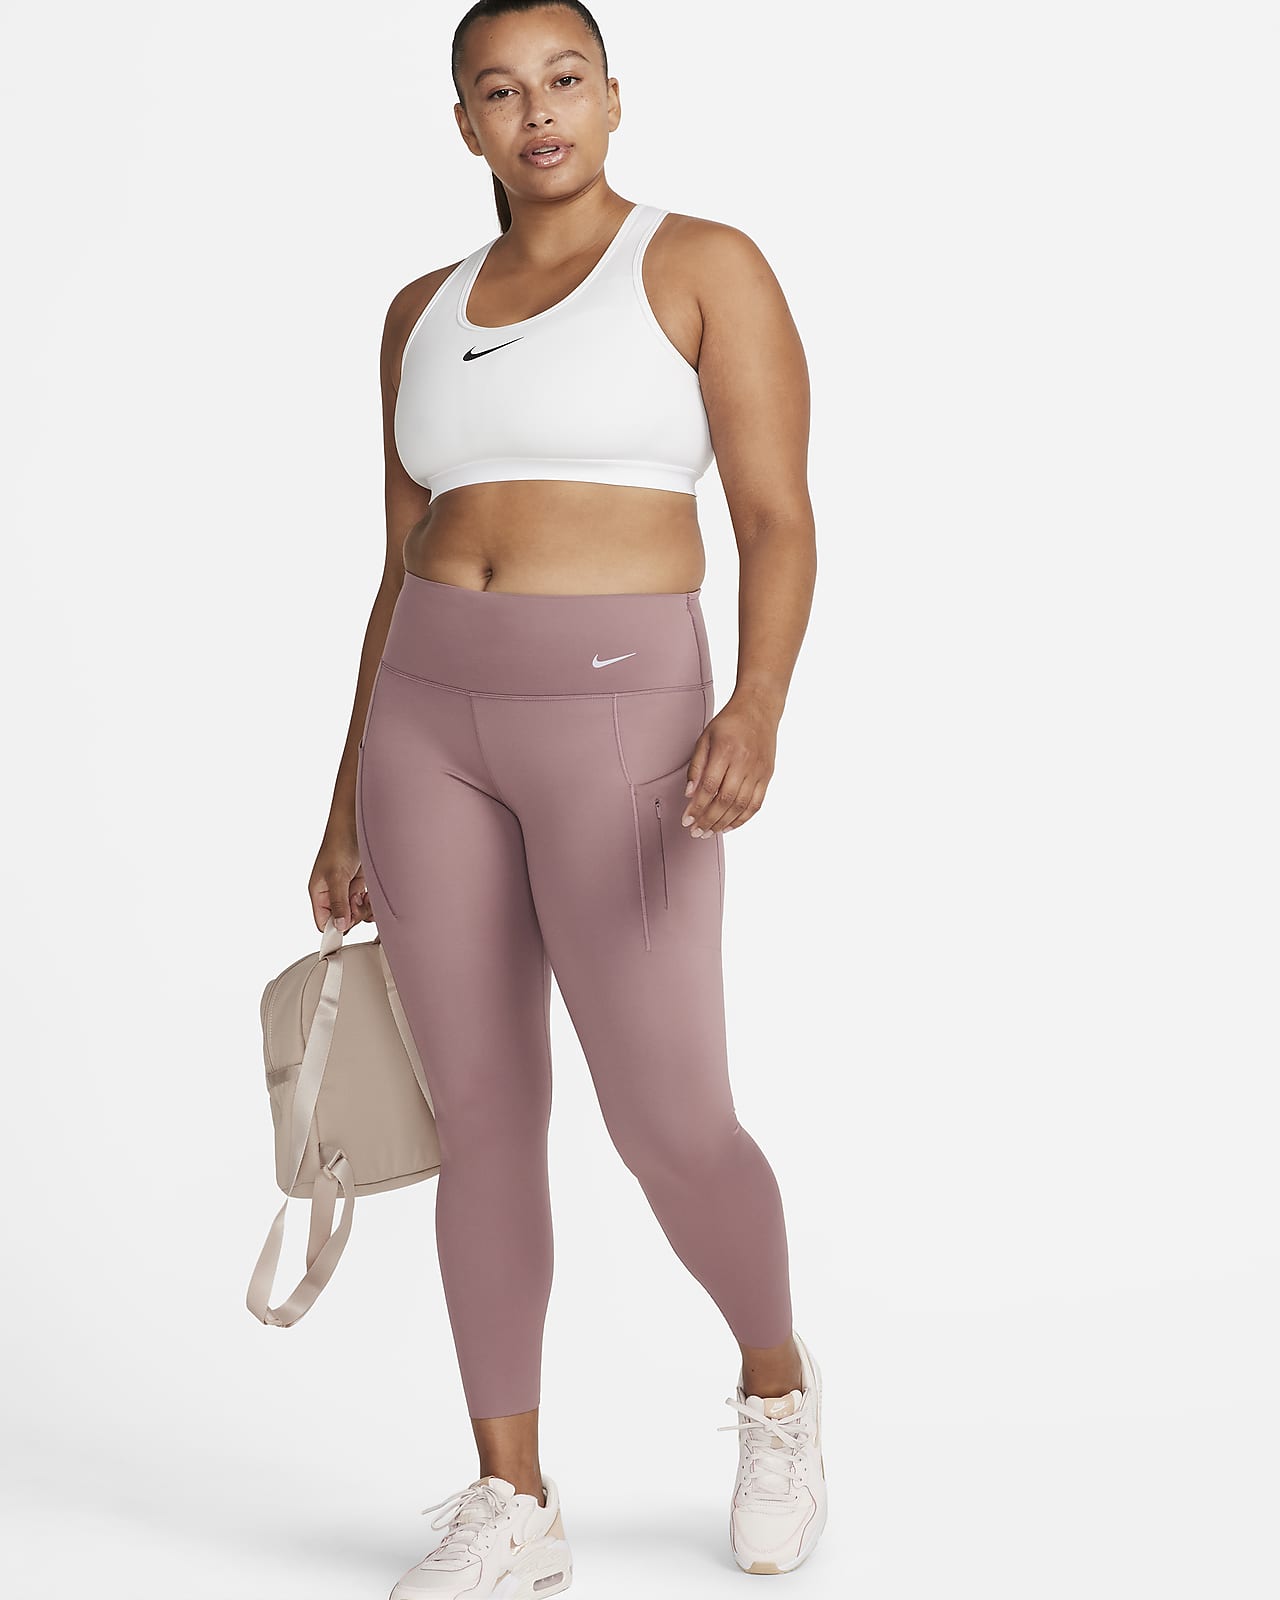 Nike Go-7/8-leggings med højt støtteniveau, mellemhøj talje og lommer til kvinder